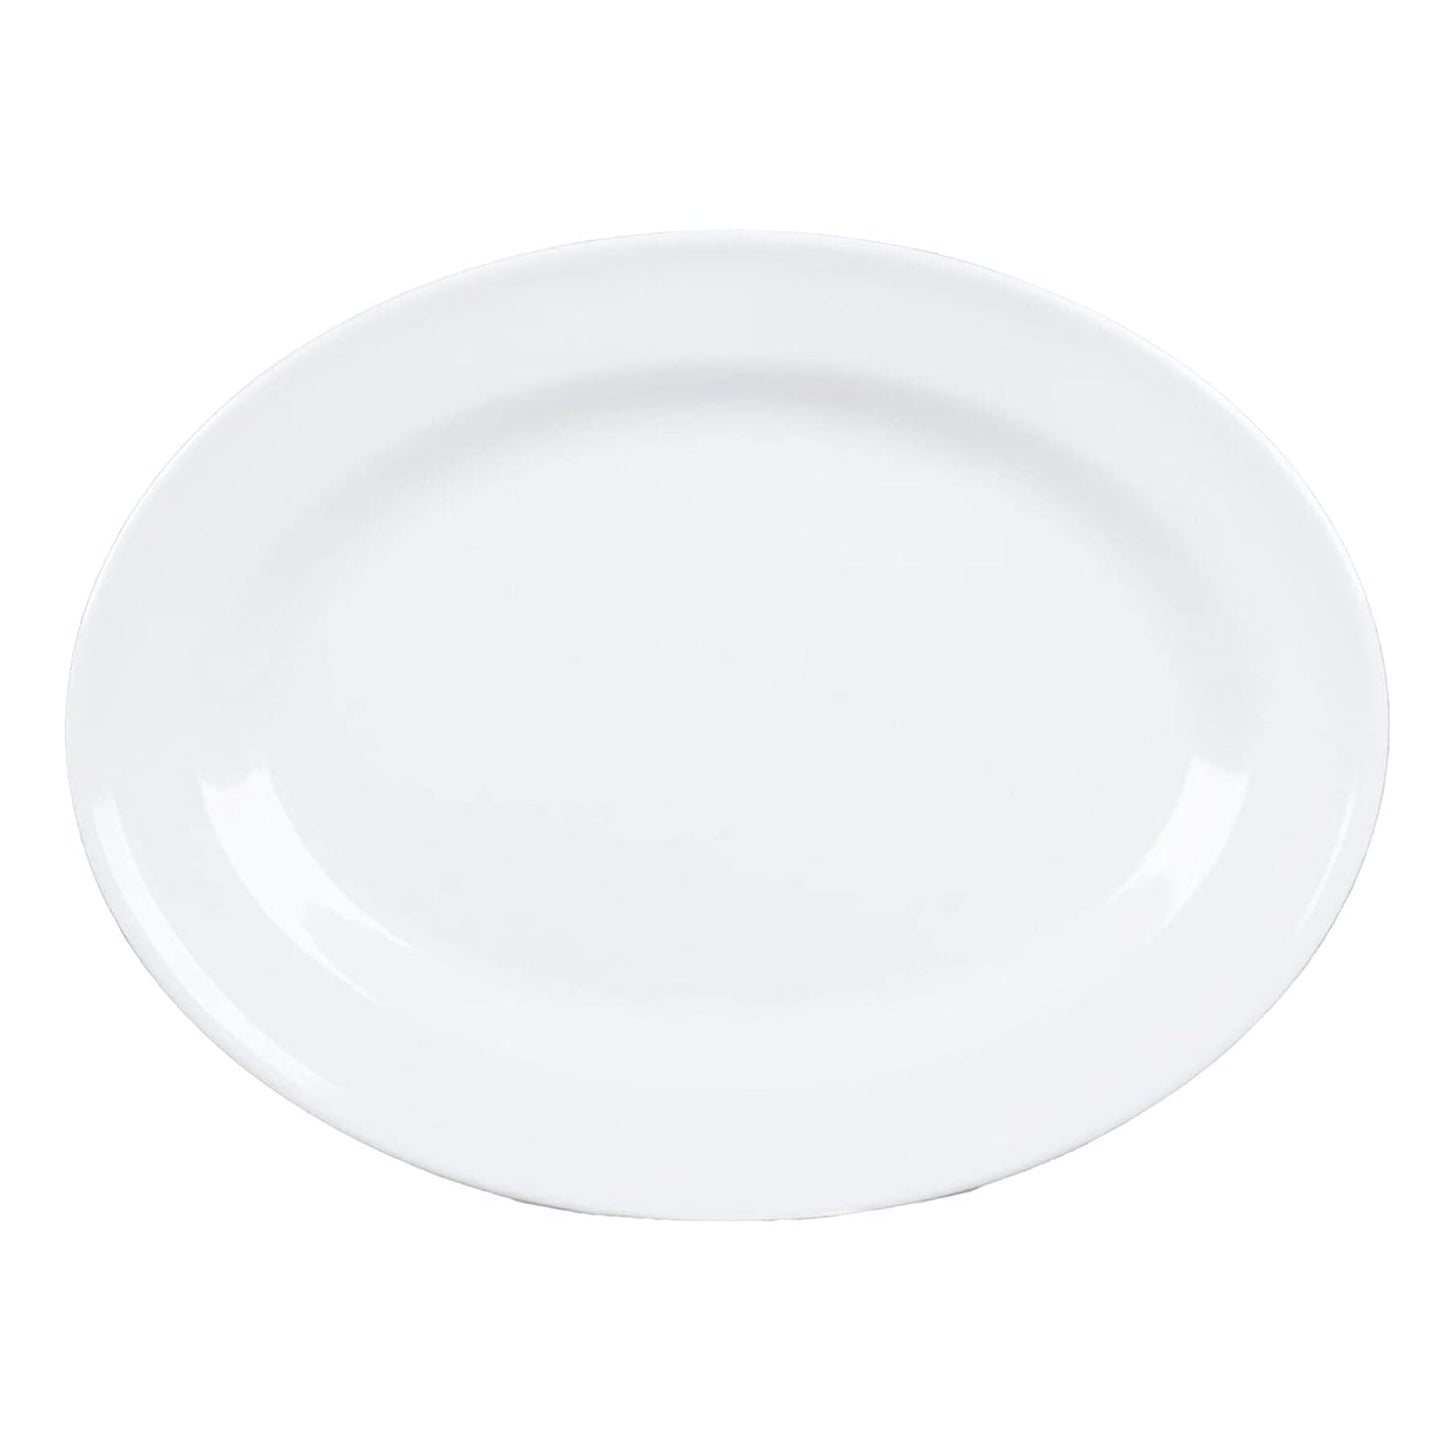 21" x 15" Oval White Ceramic Dinner Plate